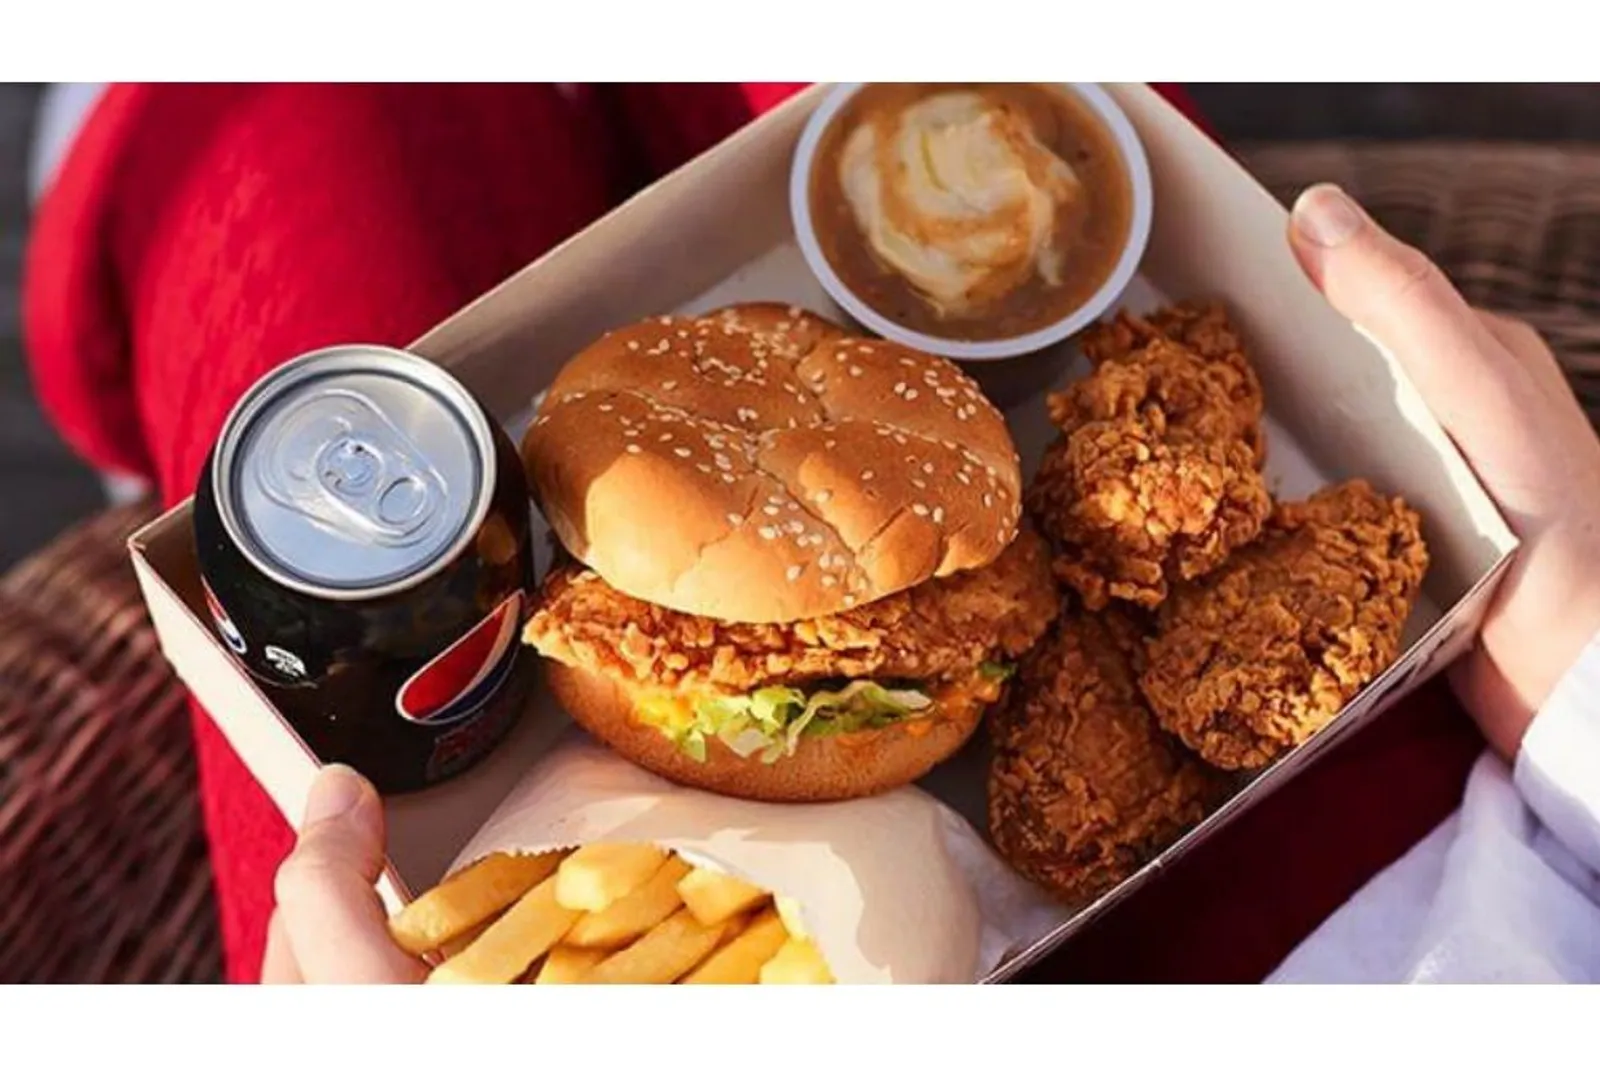 Pro Kontra #BudayaBeberes KFC Biasakan Si Pemalas Lebih Rajin